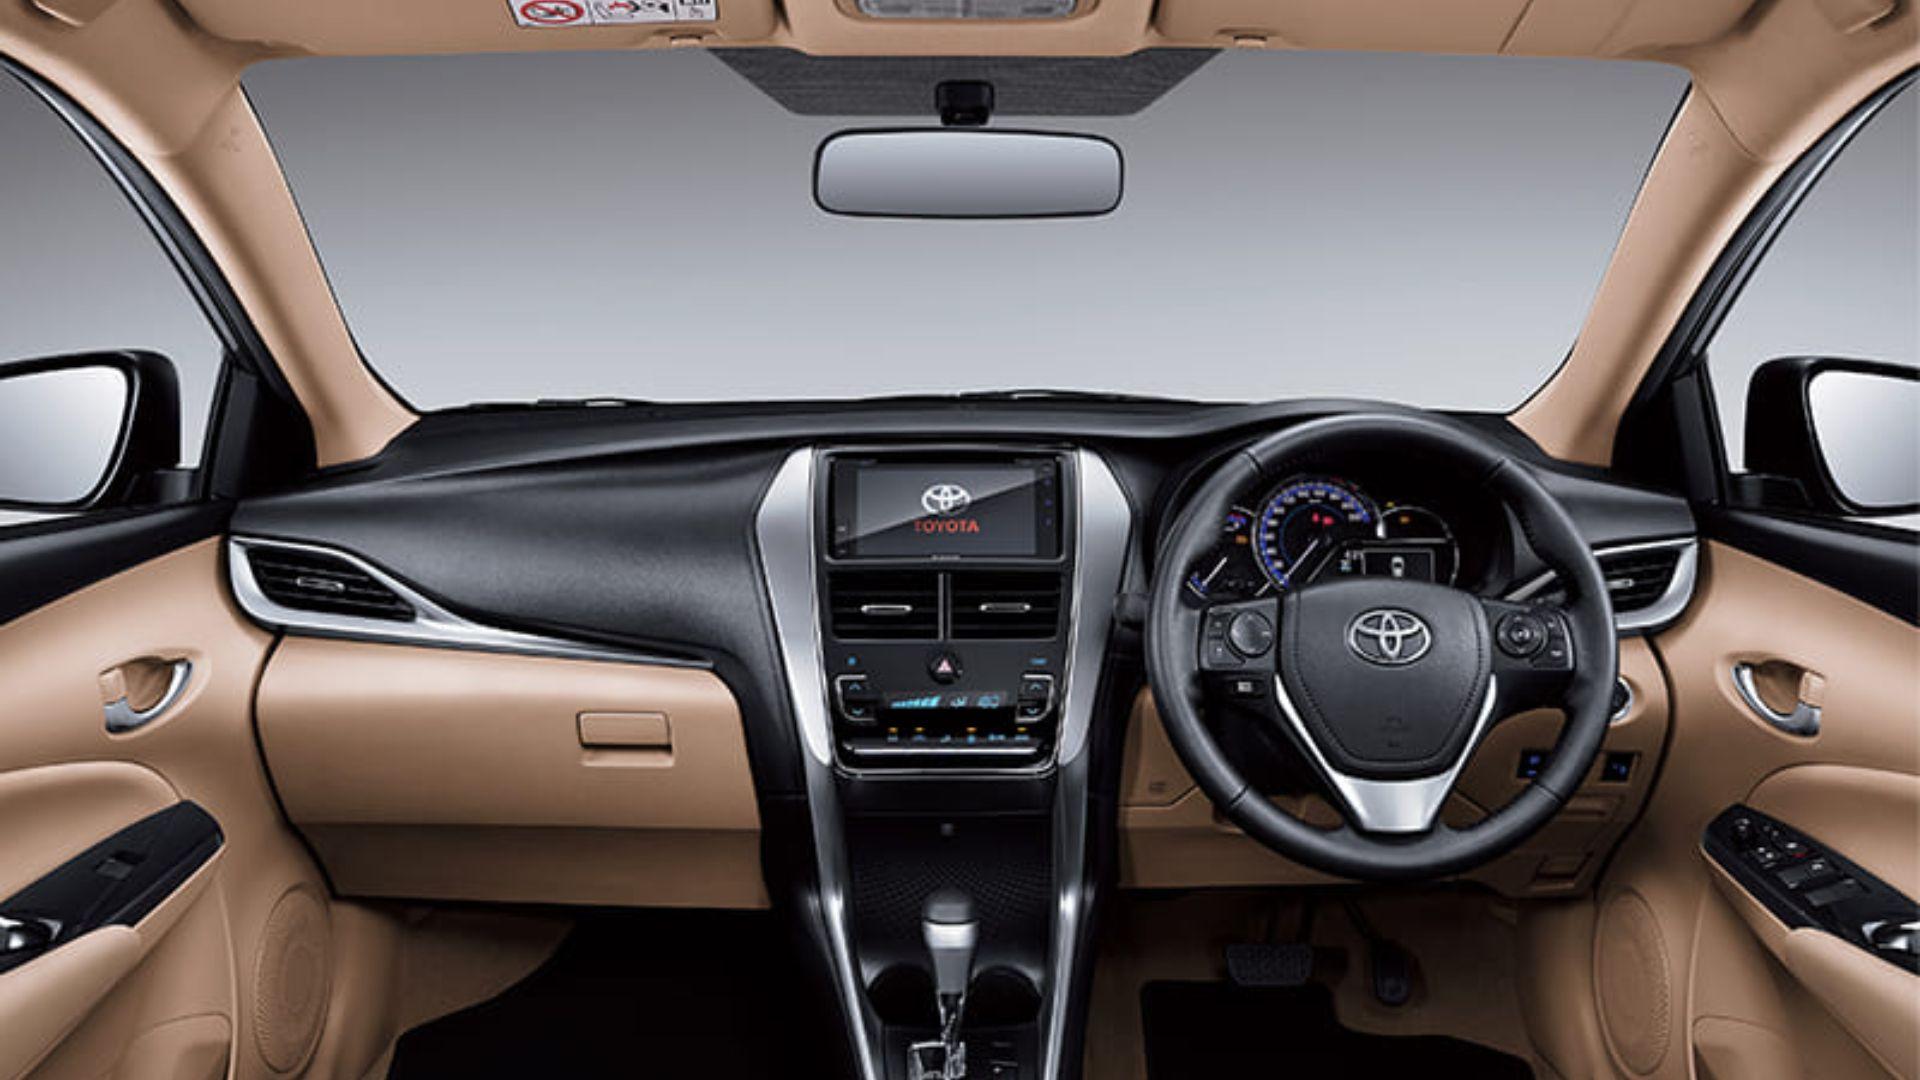 TRAC - Sedan - Toyota Vios - Interior 0.jpg